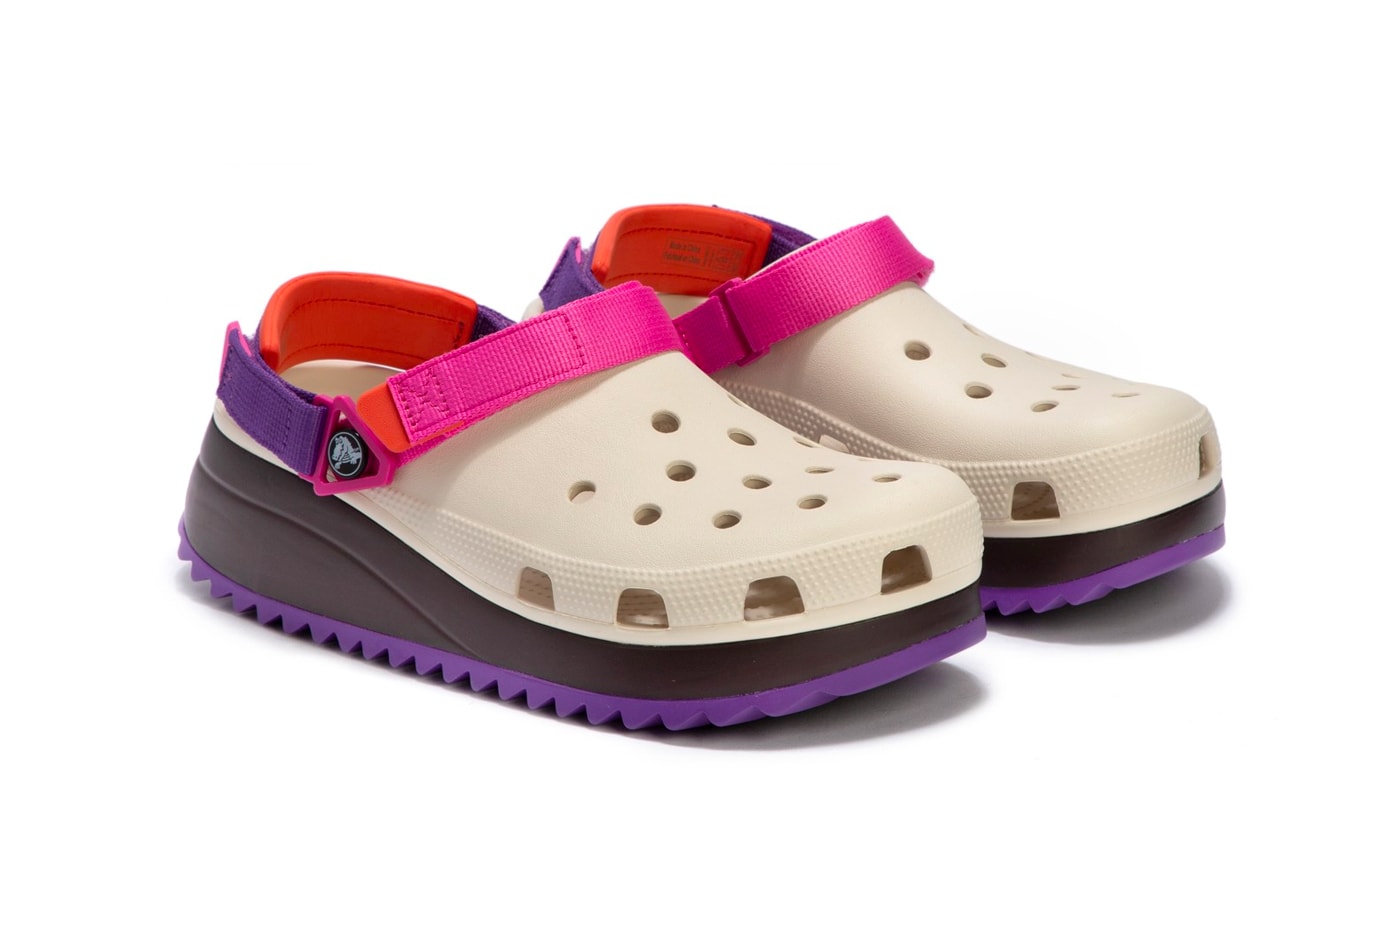 Crocs Classic Hiker Clog Release footwear sandals adjustable velcro straps sawtooth outsole black white hbx